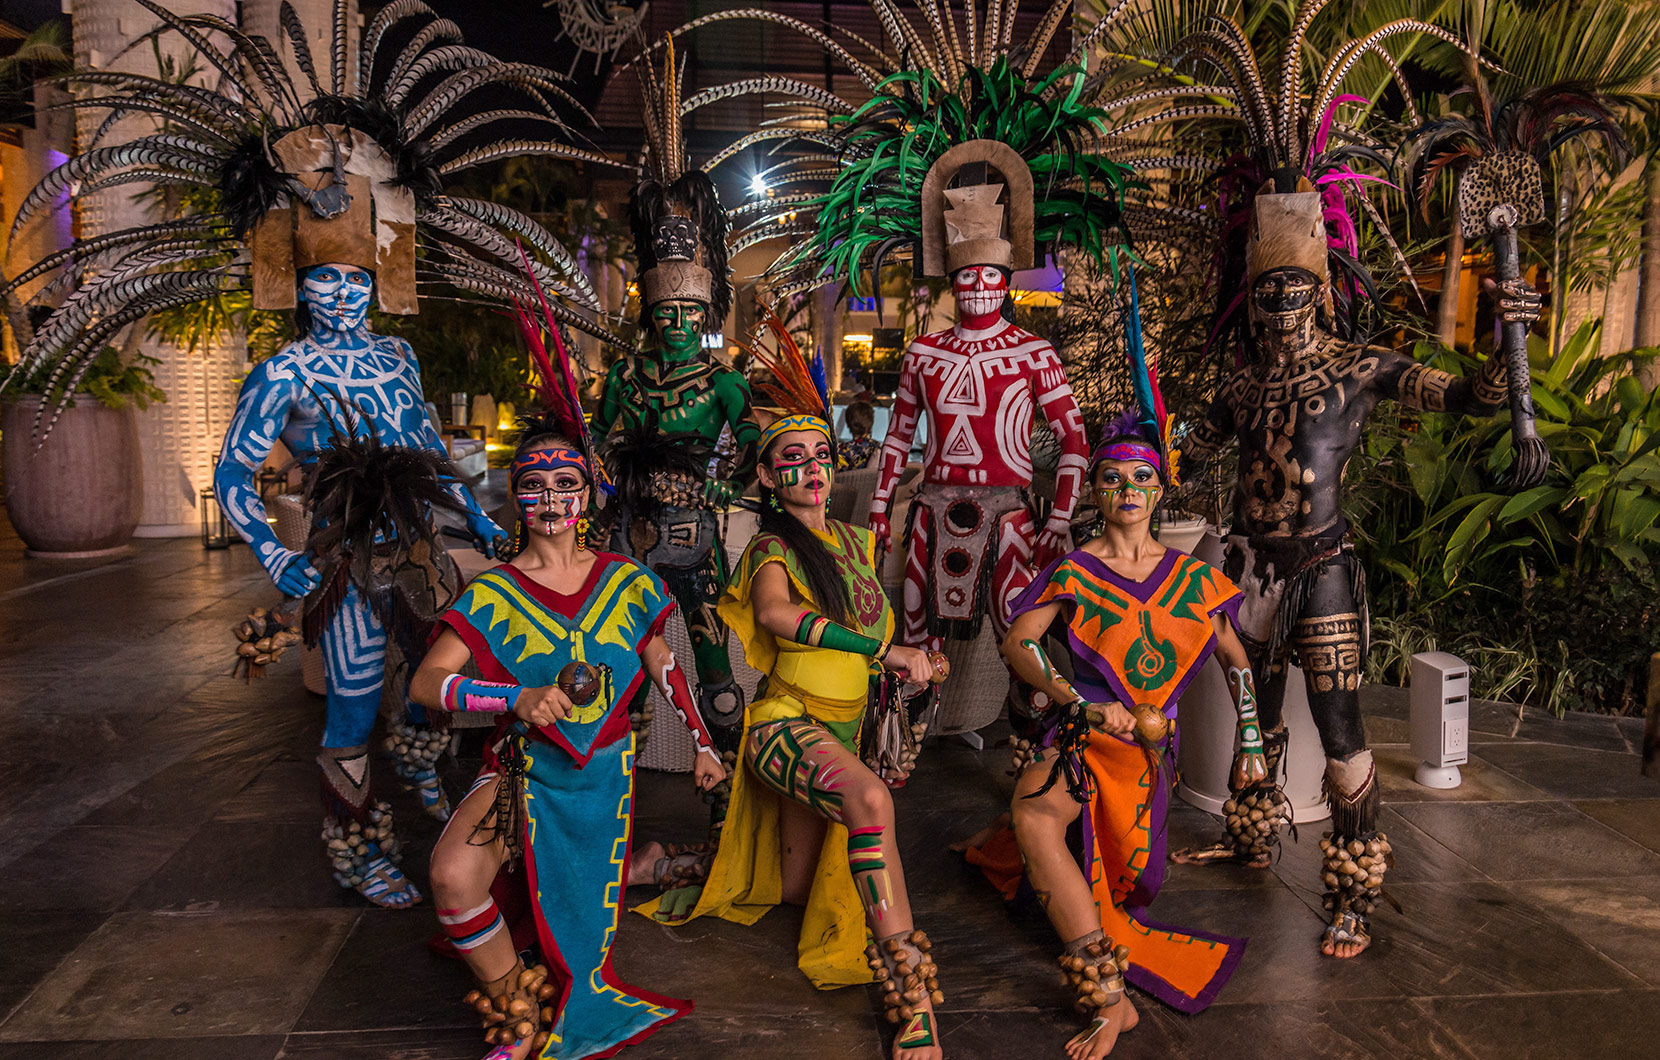 Santuario at Vidanta Nuevo Vallarta offers a wealth of incredible acts, including these amazing dancers.